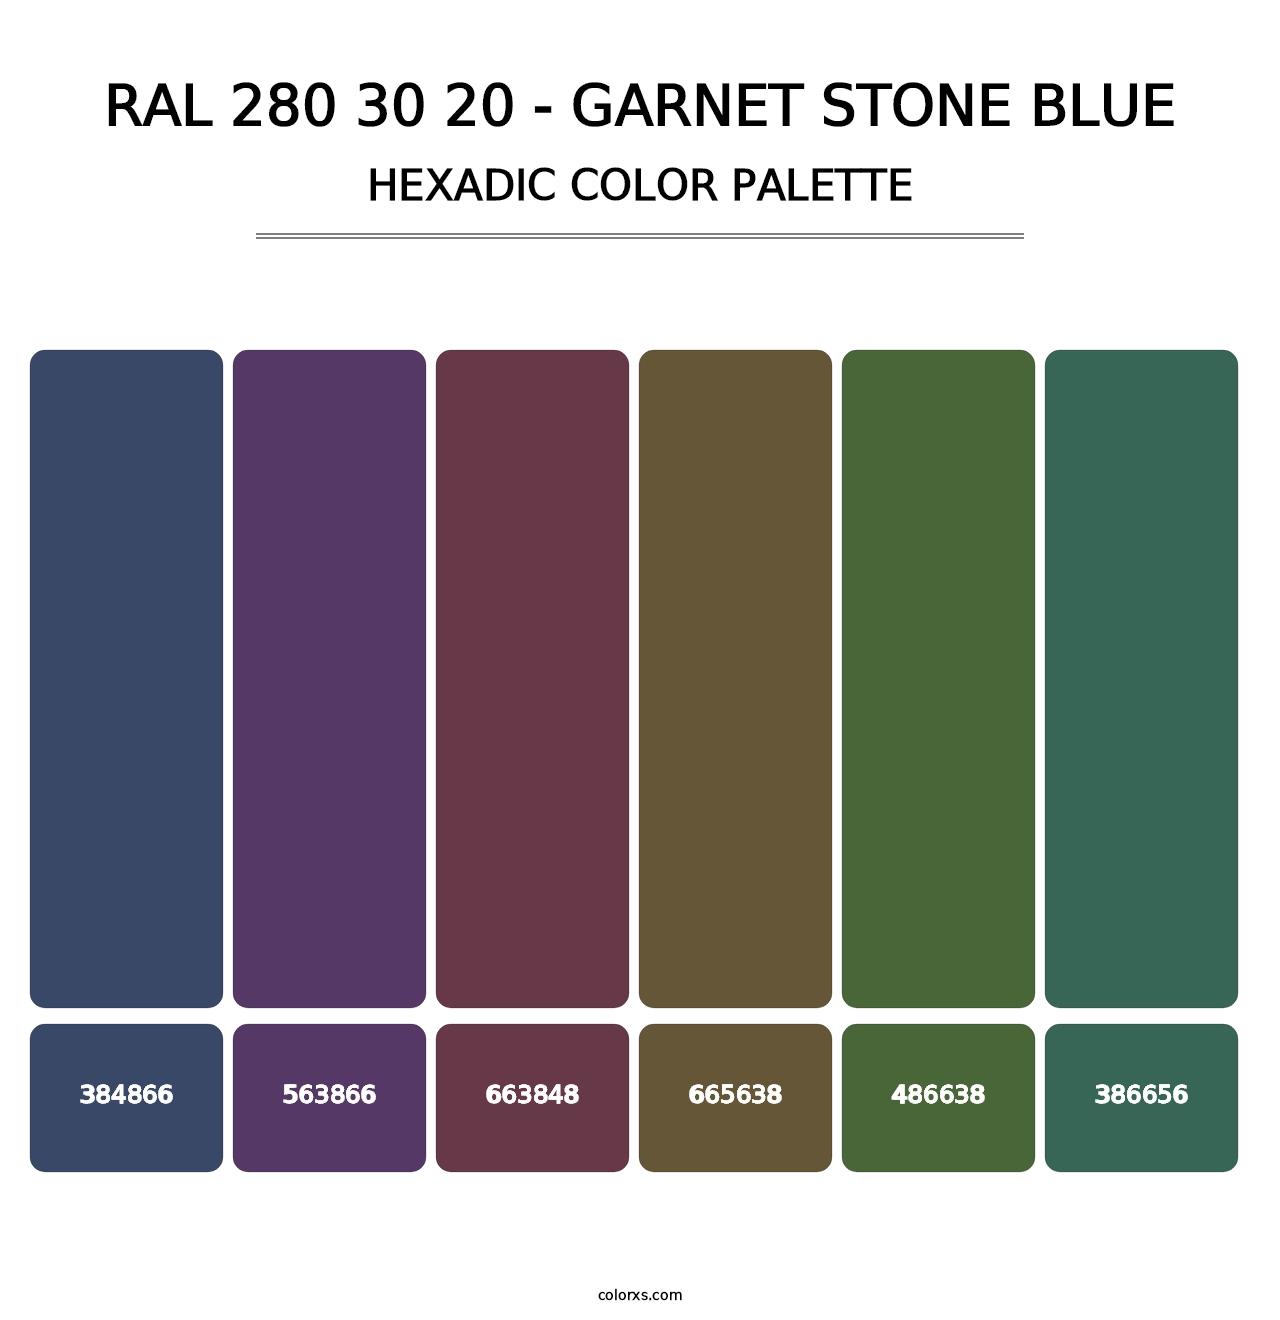 RAL 280 30 20 - Garnet Stone Blue - Hexadic Color Palette